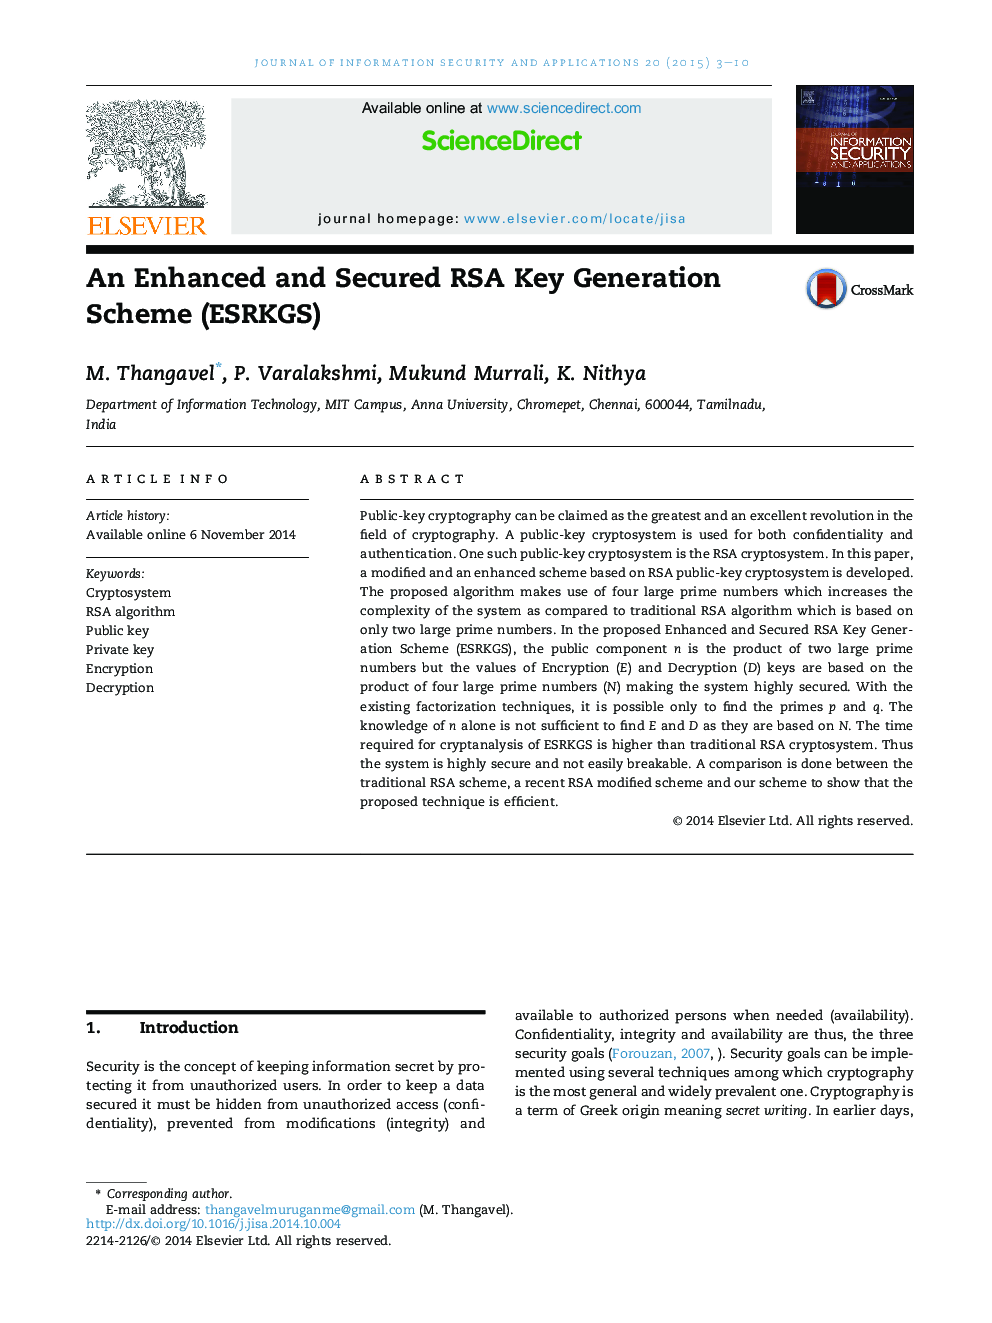 An Enhanced and Secured RSA Key Generation Scheme (ESRKGS)